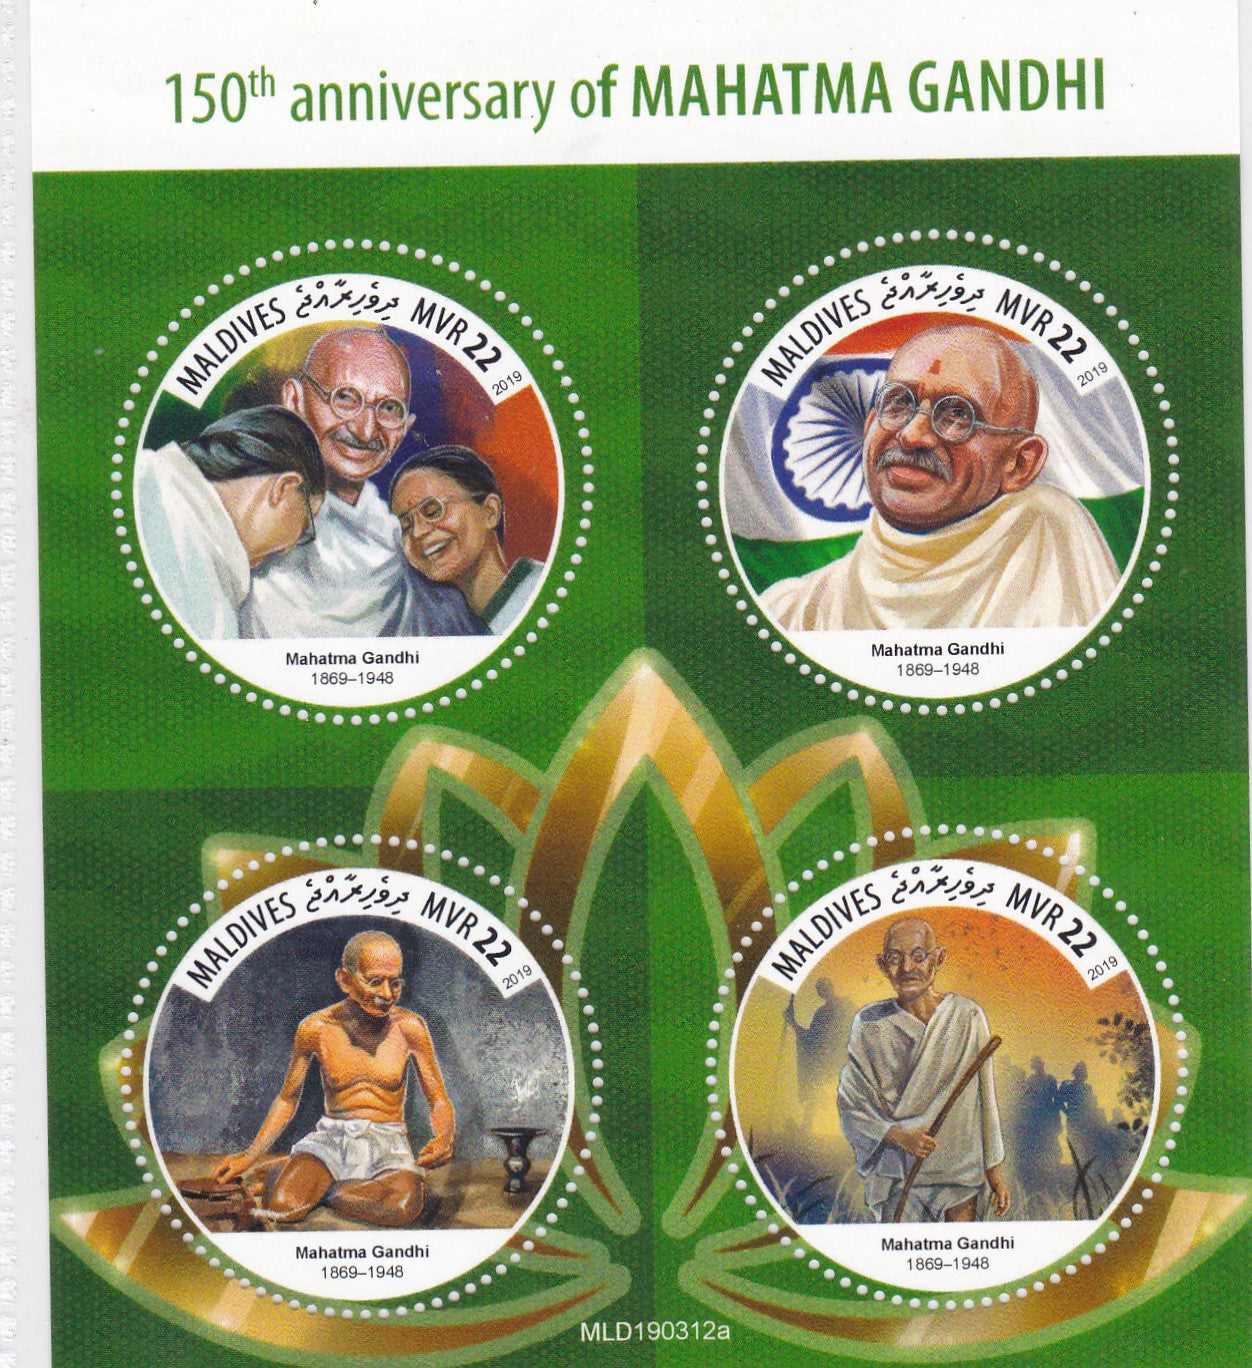 Maldives-Mahatma Gandhi 2019 stamps